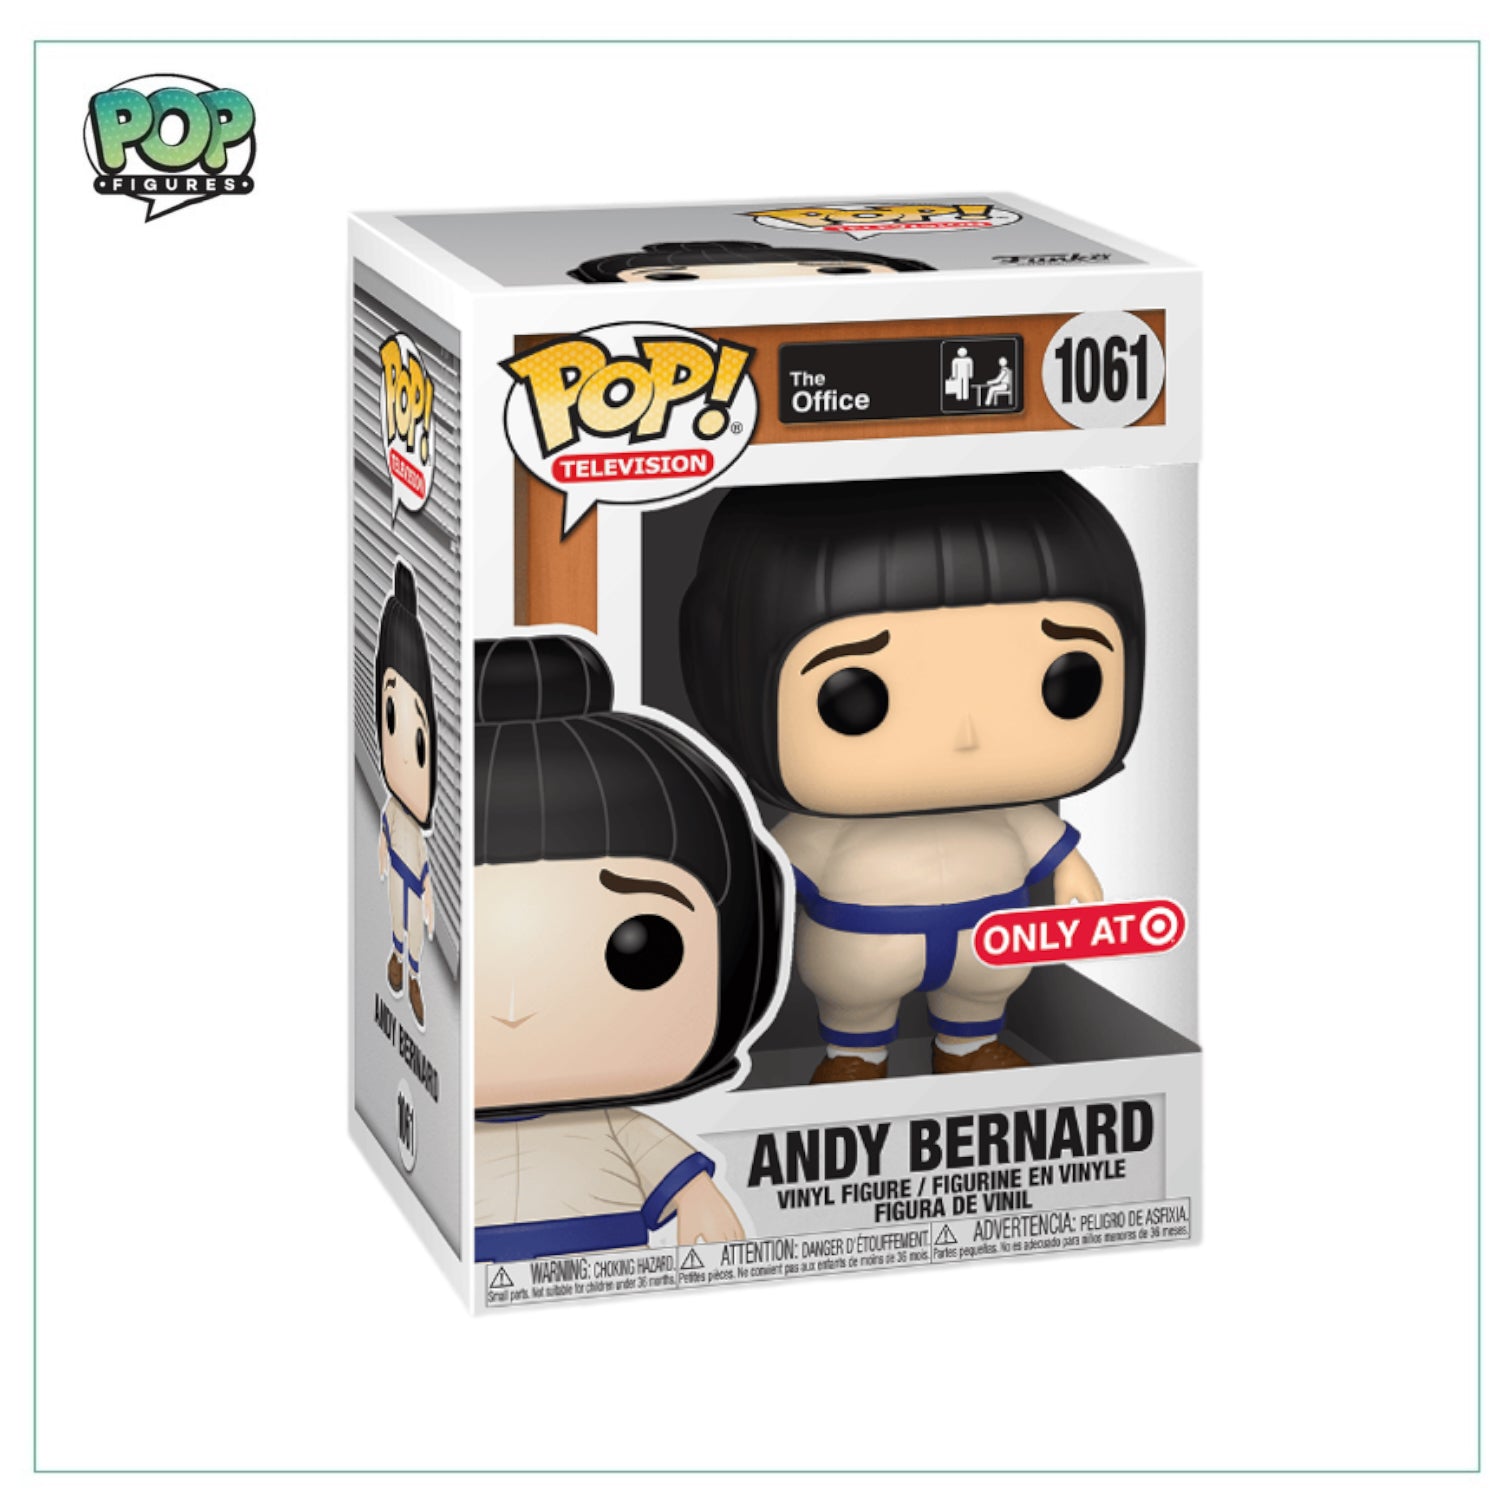 Andy Bernard #1061 Funko Pop! - The Office -  Target Exclusive